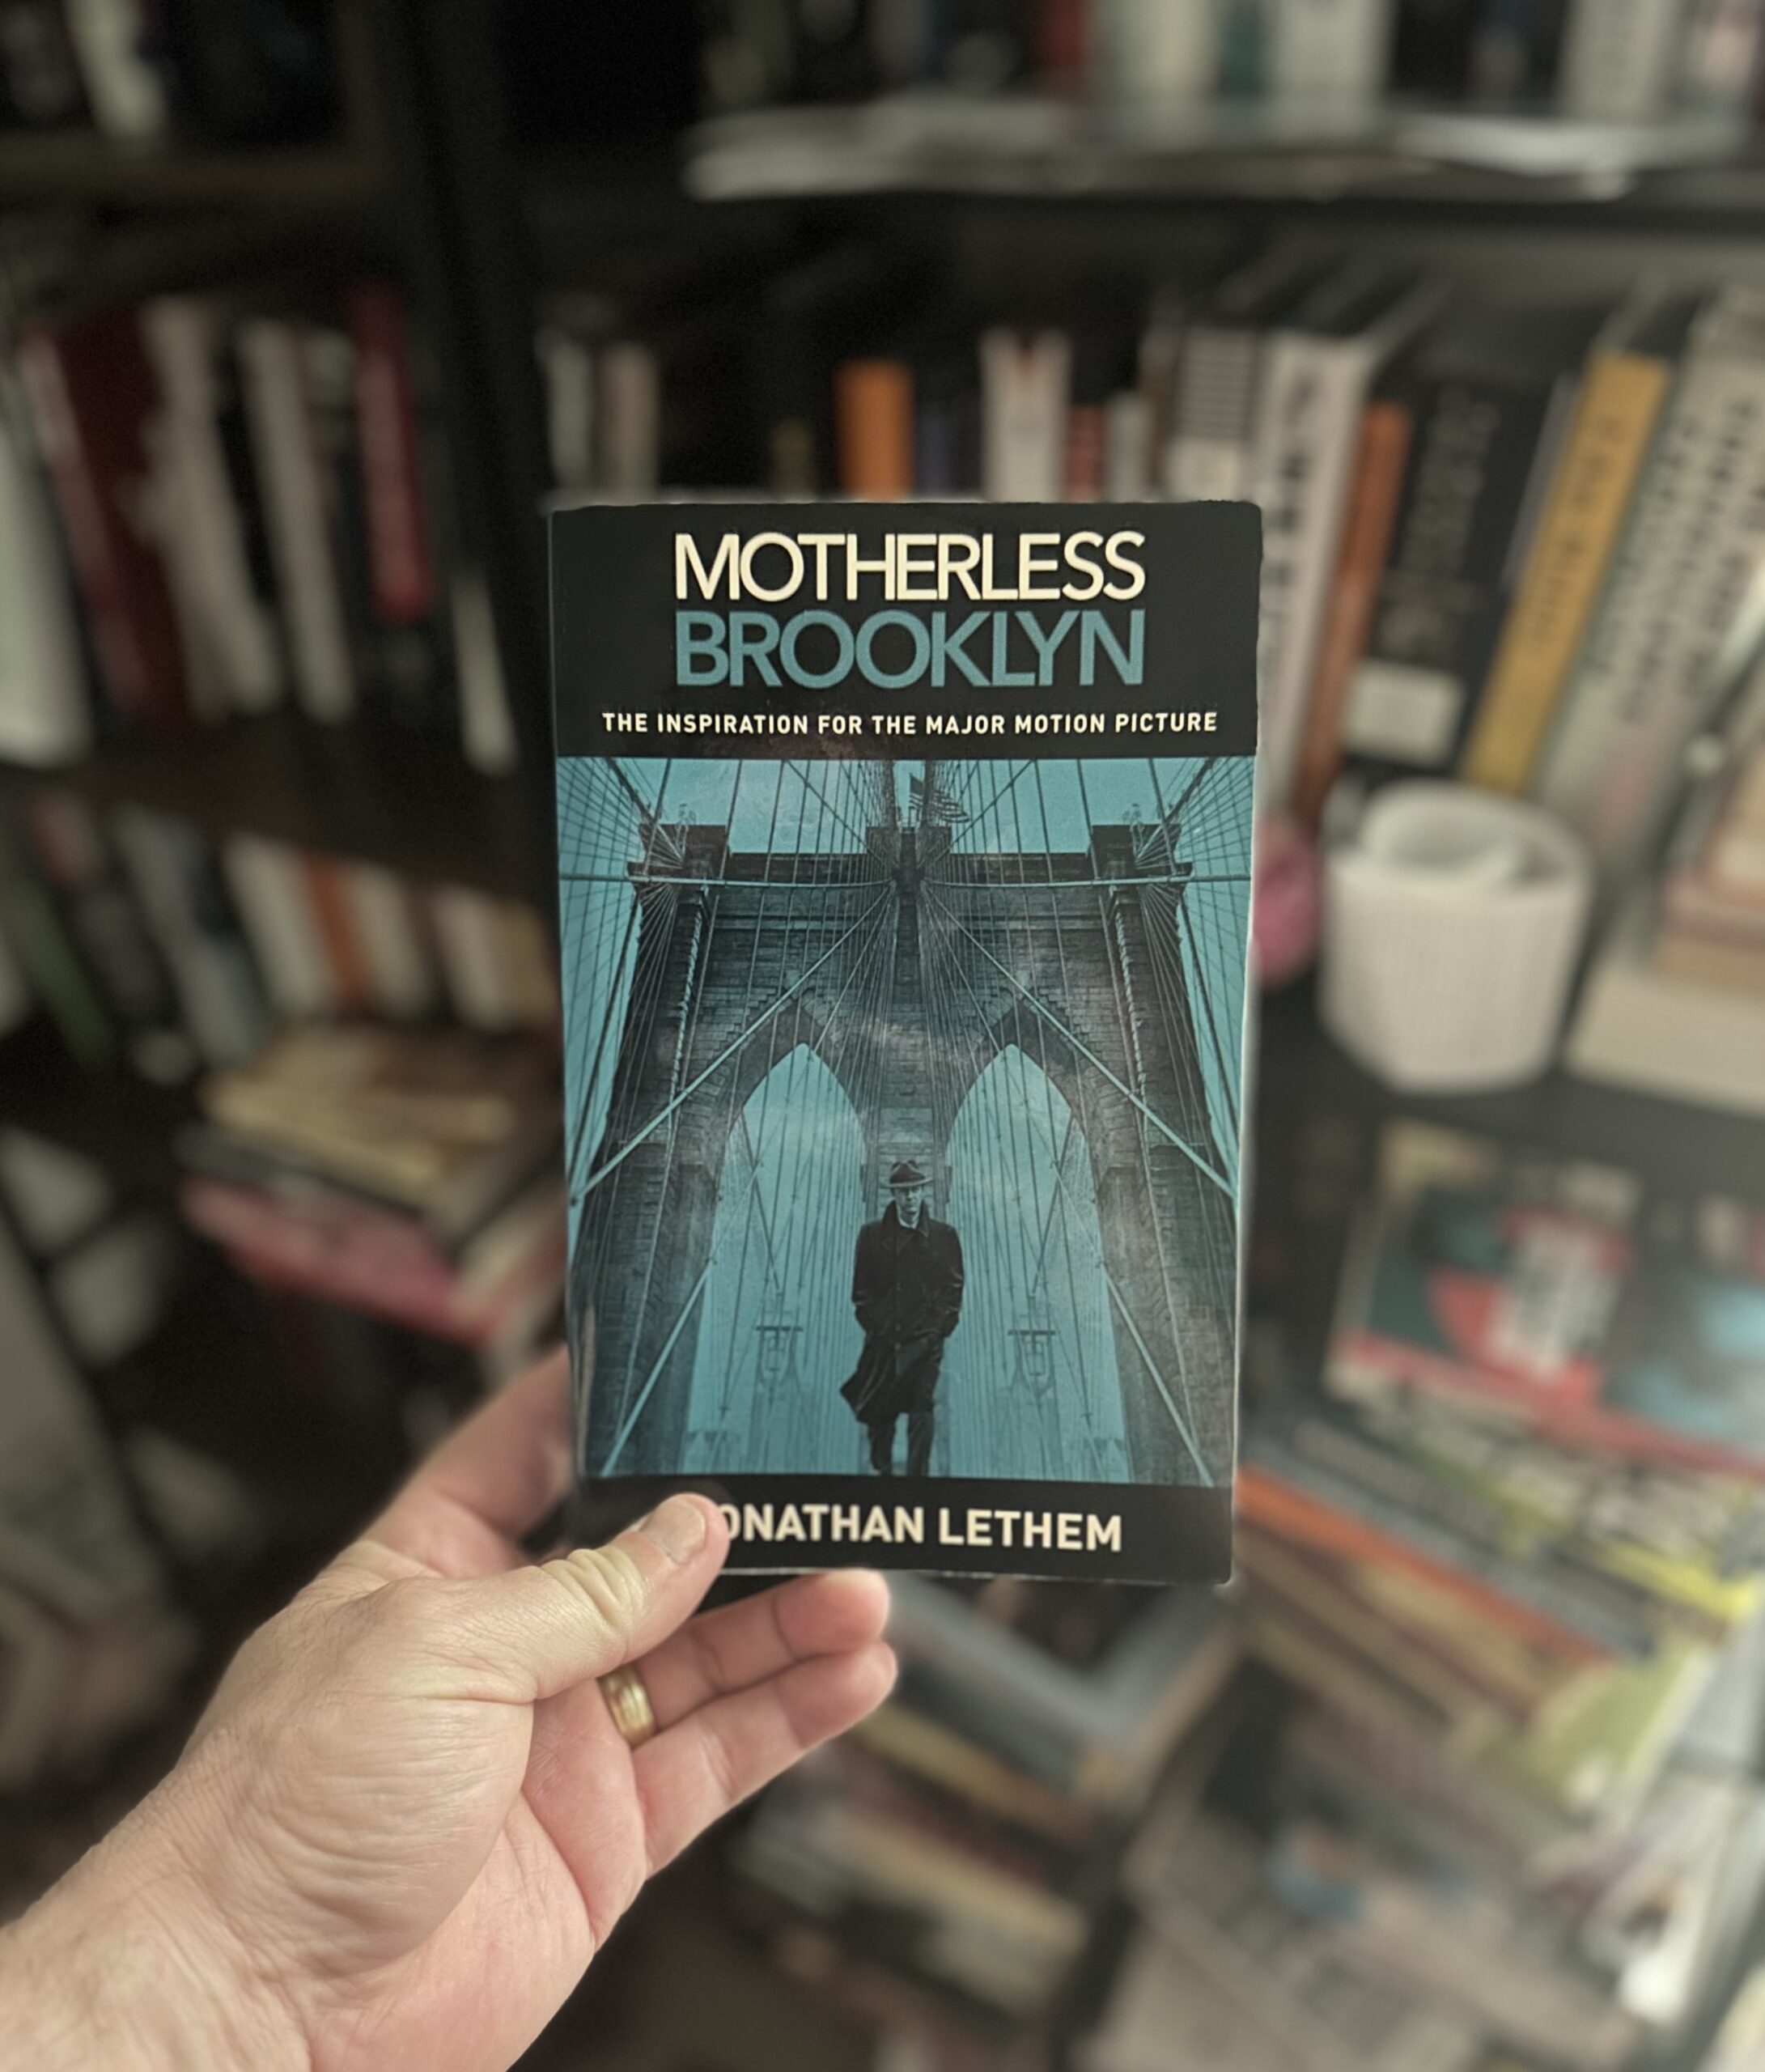 Motherless Brooklyn by Jonathan Lethem